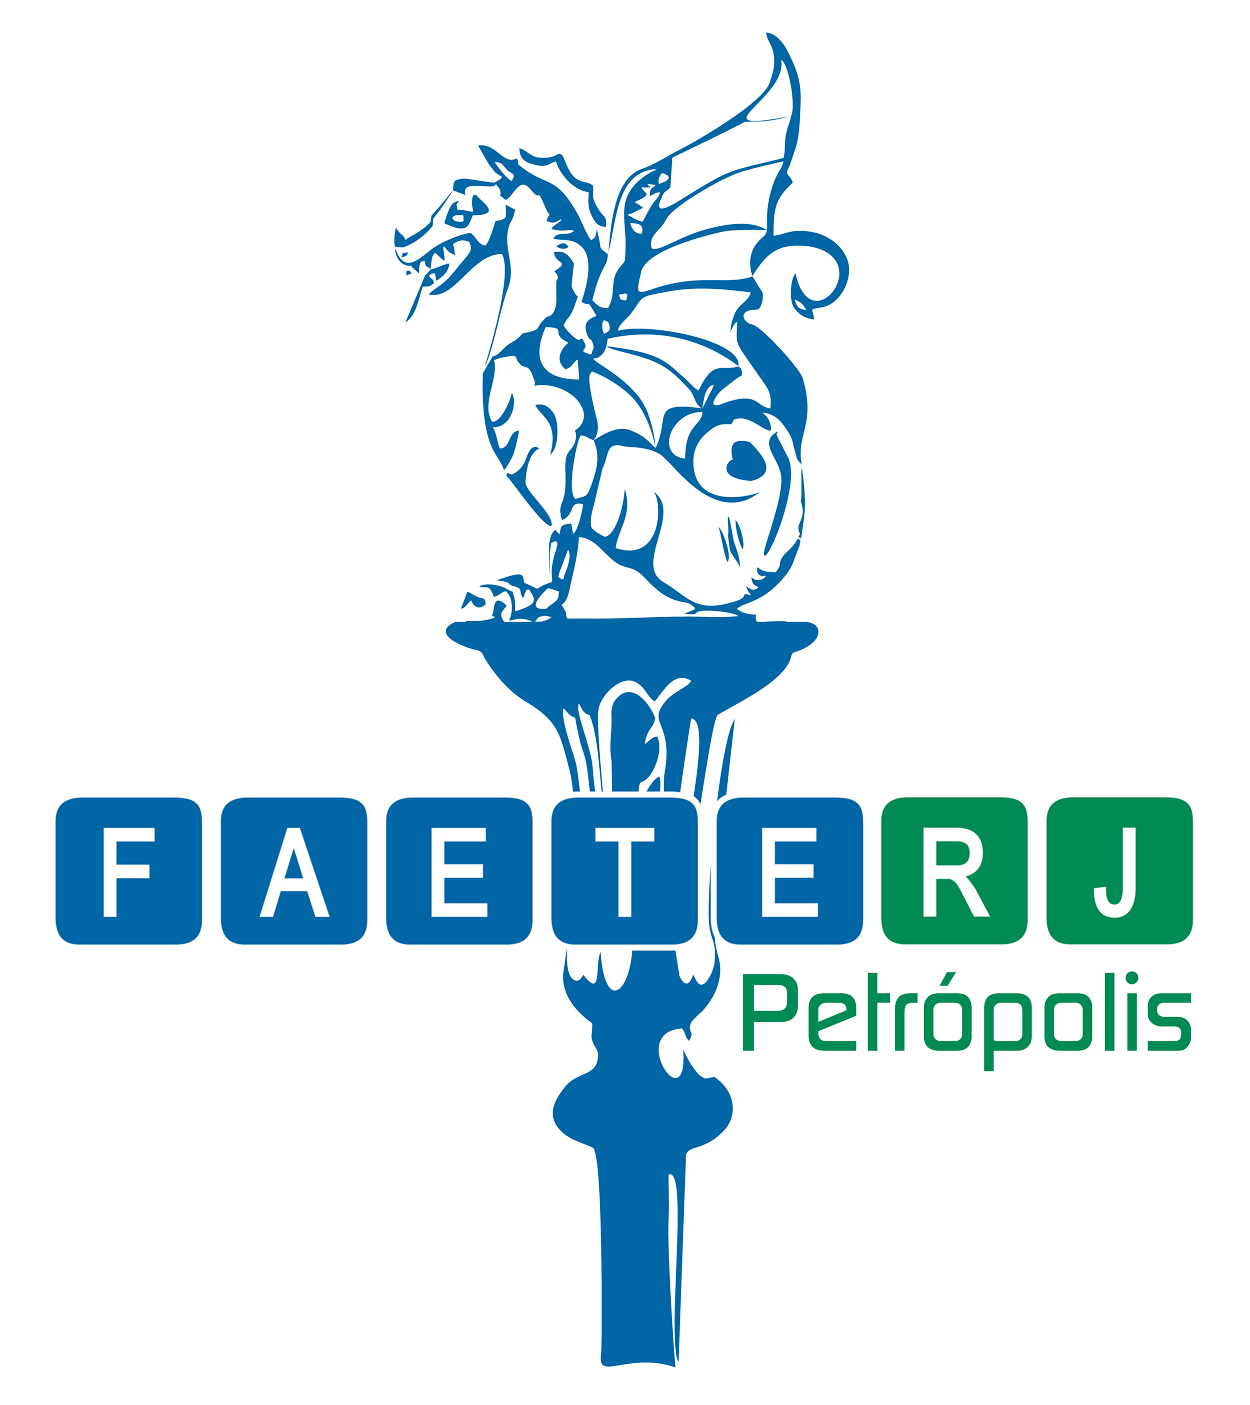 logo_faeterj-petropolis_medio.png